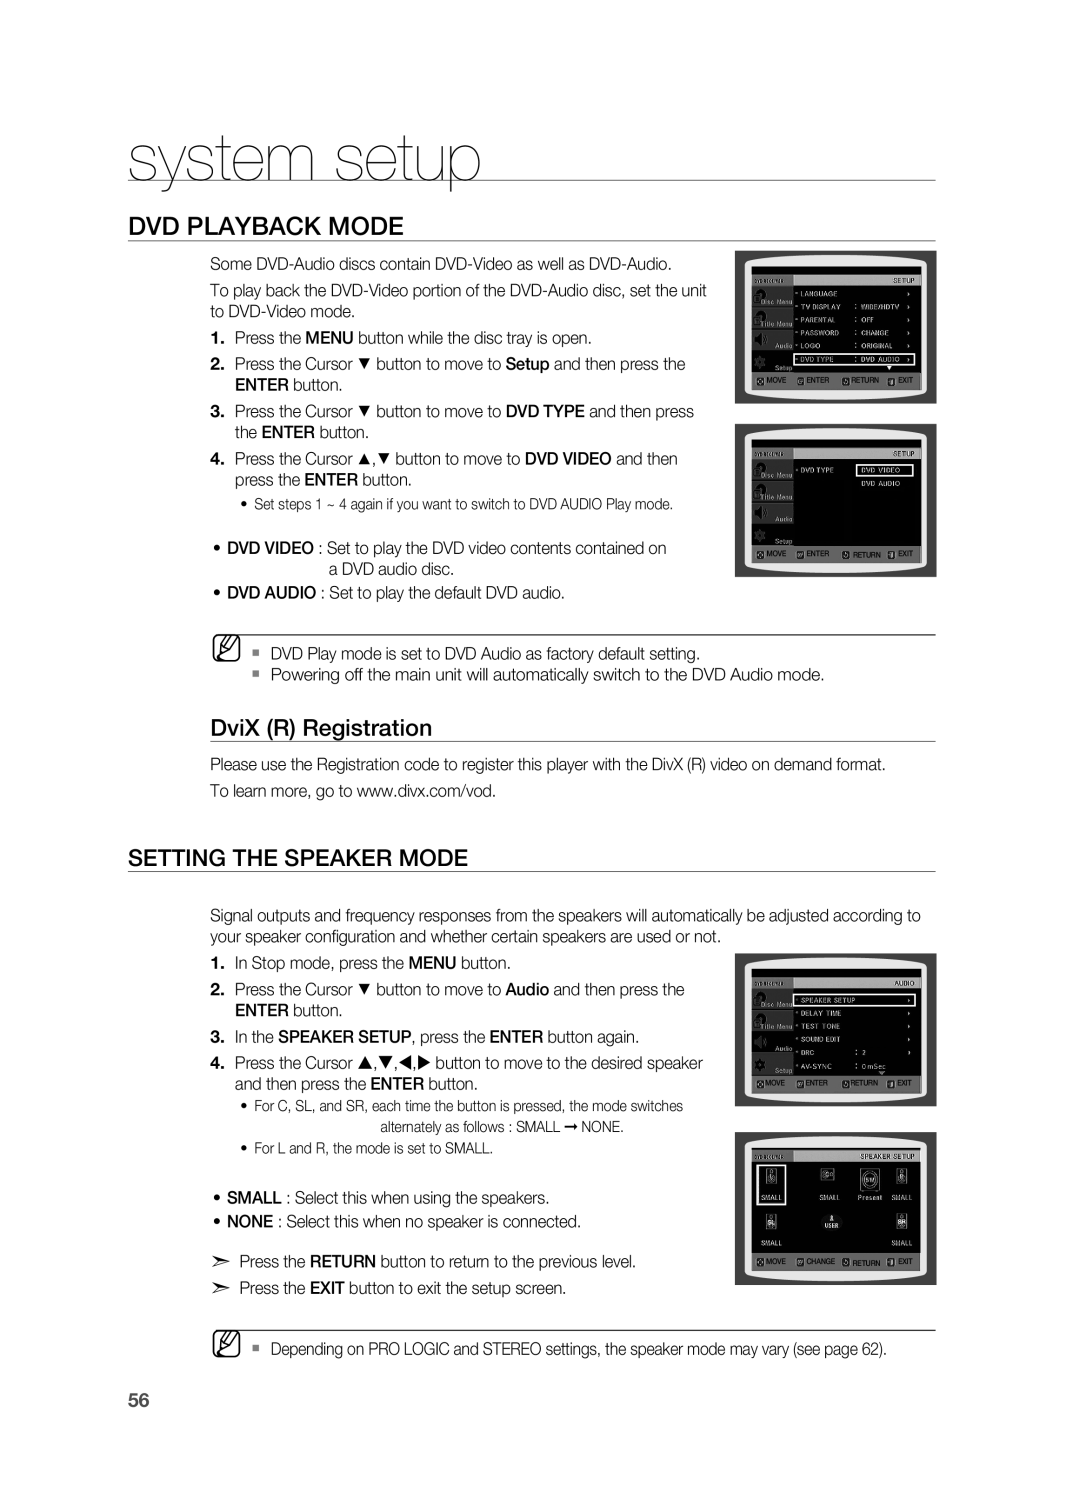 Samsung HT-TZ515 user manual DVD Playback Mode, system setup, DviX R Registration, Setting the Speaker Mode 